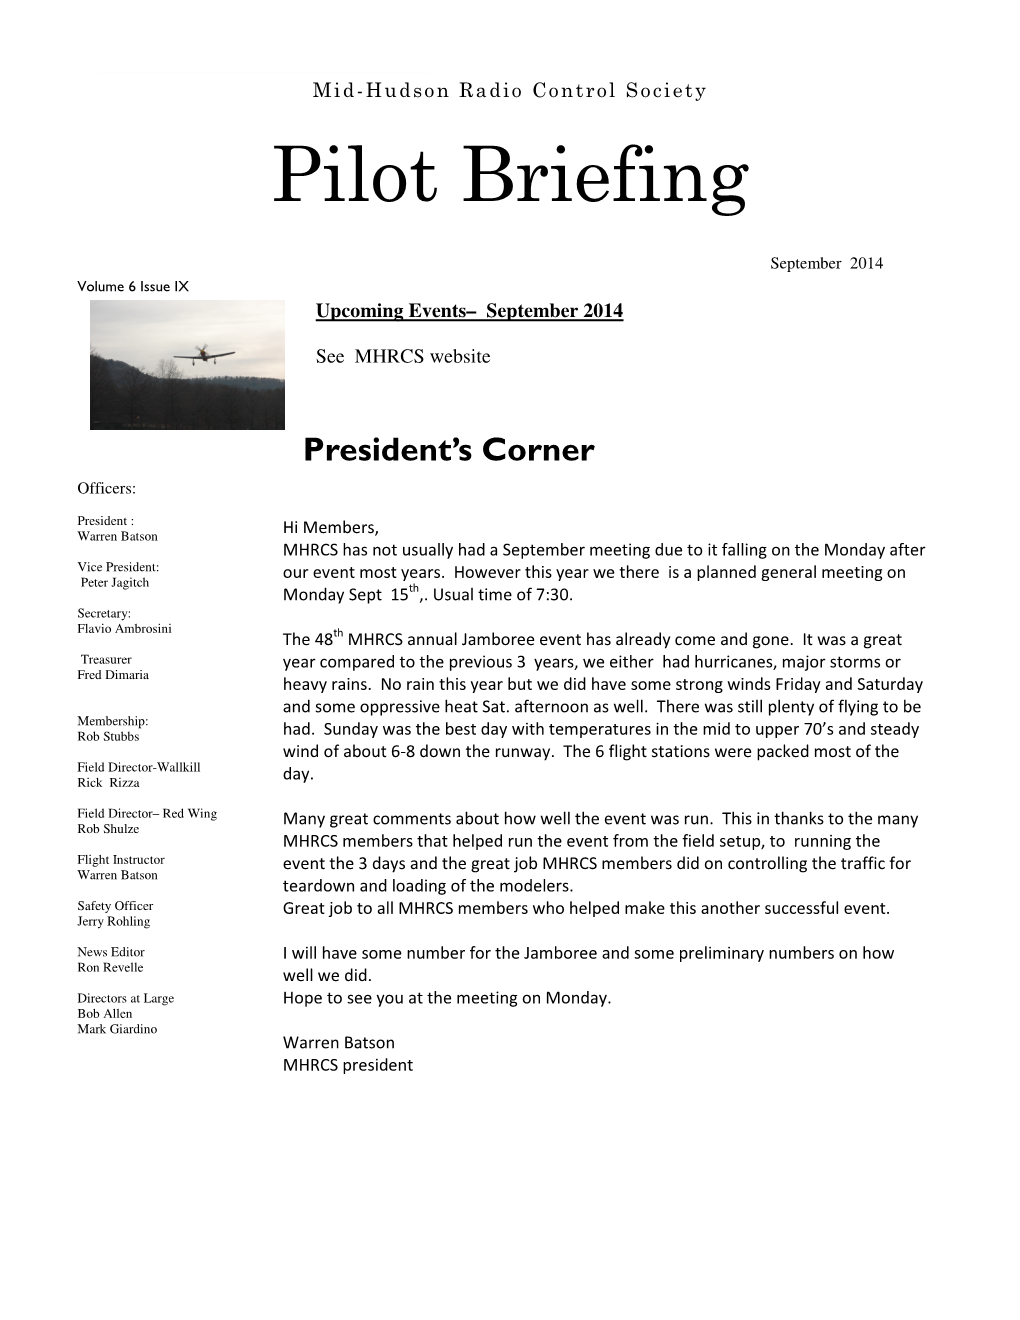 Pilot Briefing September 2014